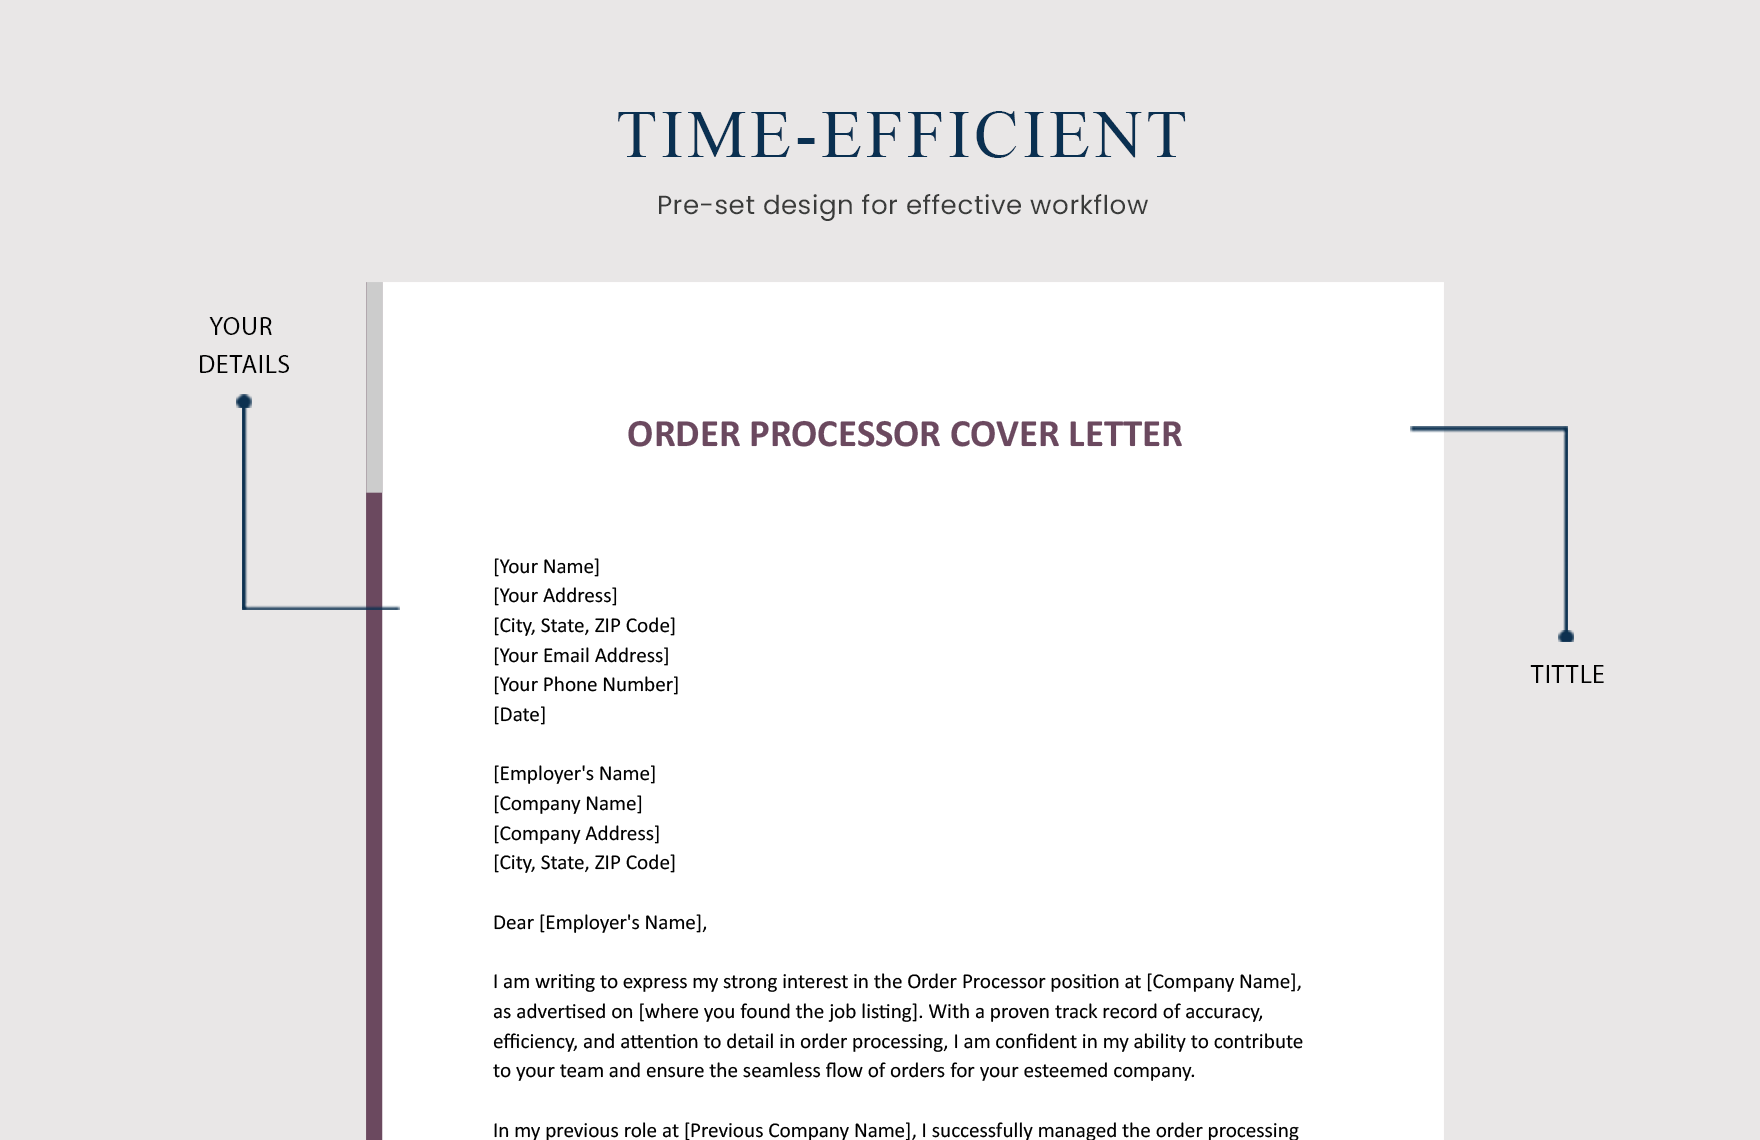 Order Processor Cover Letter